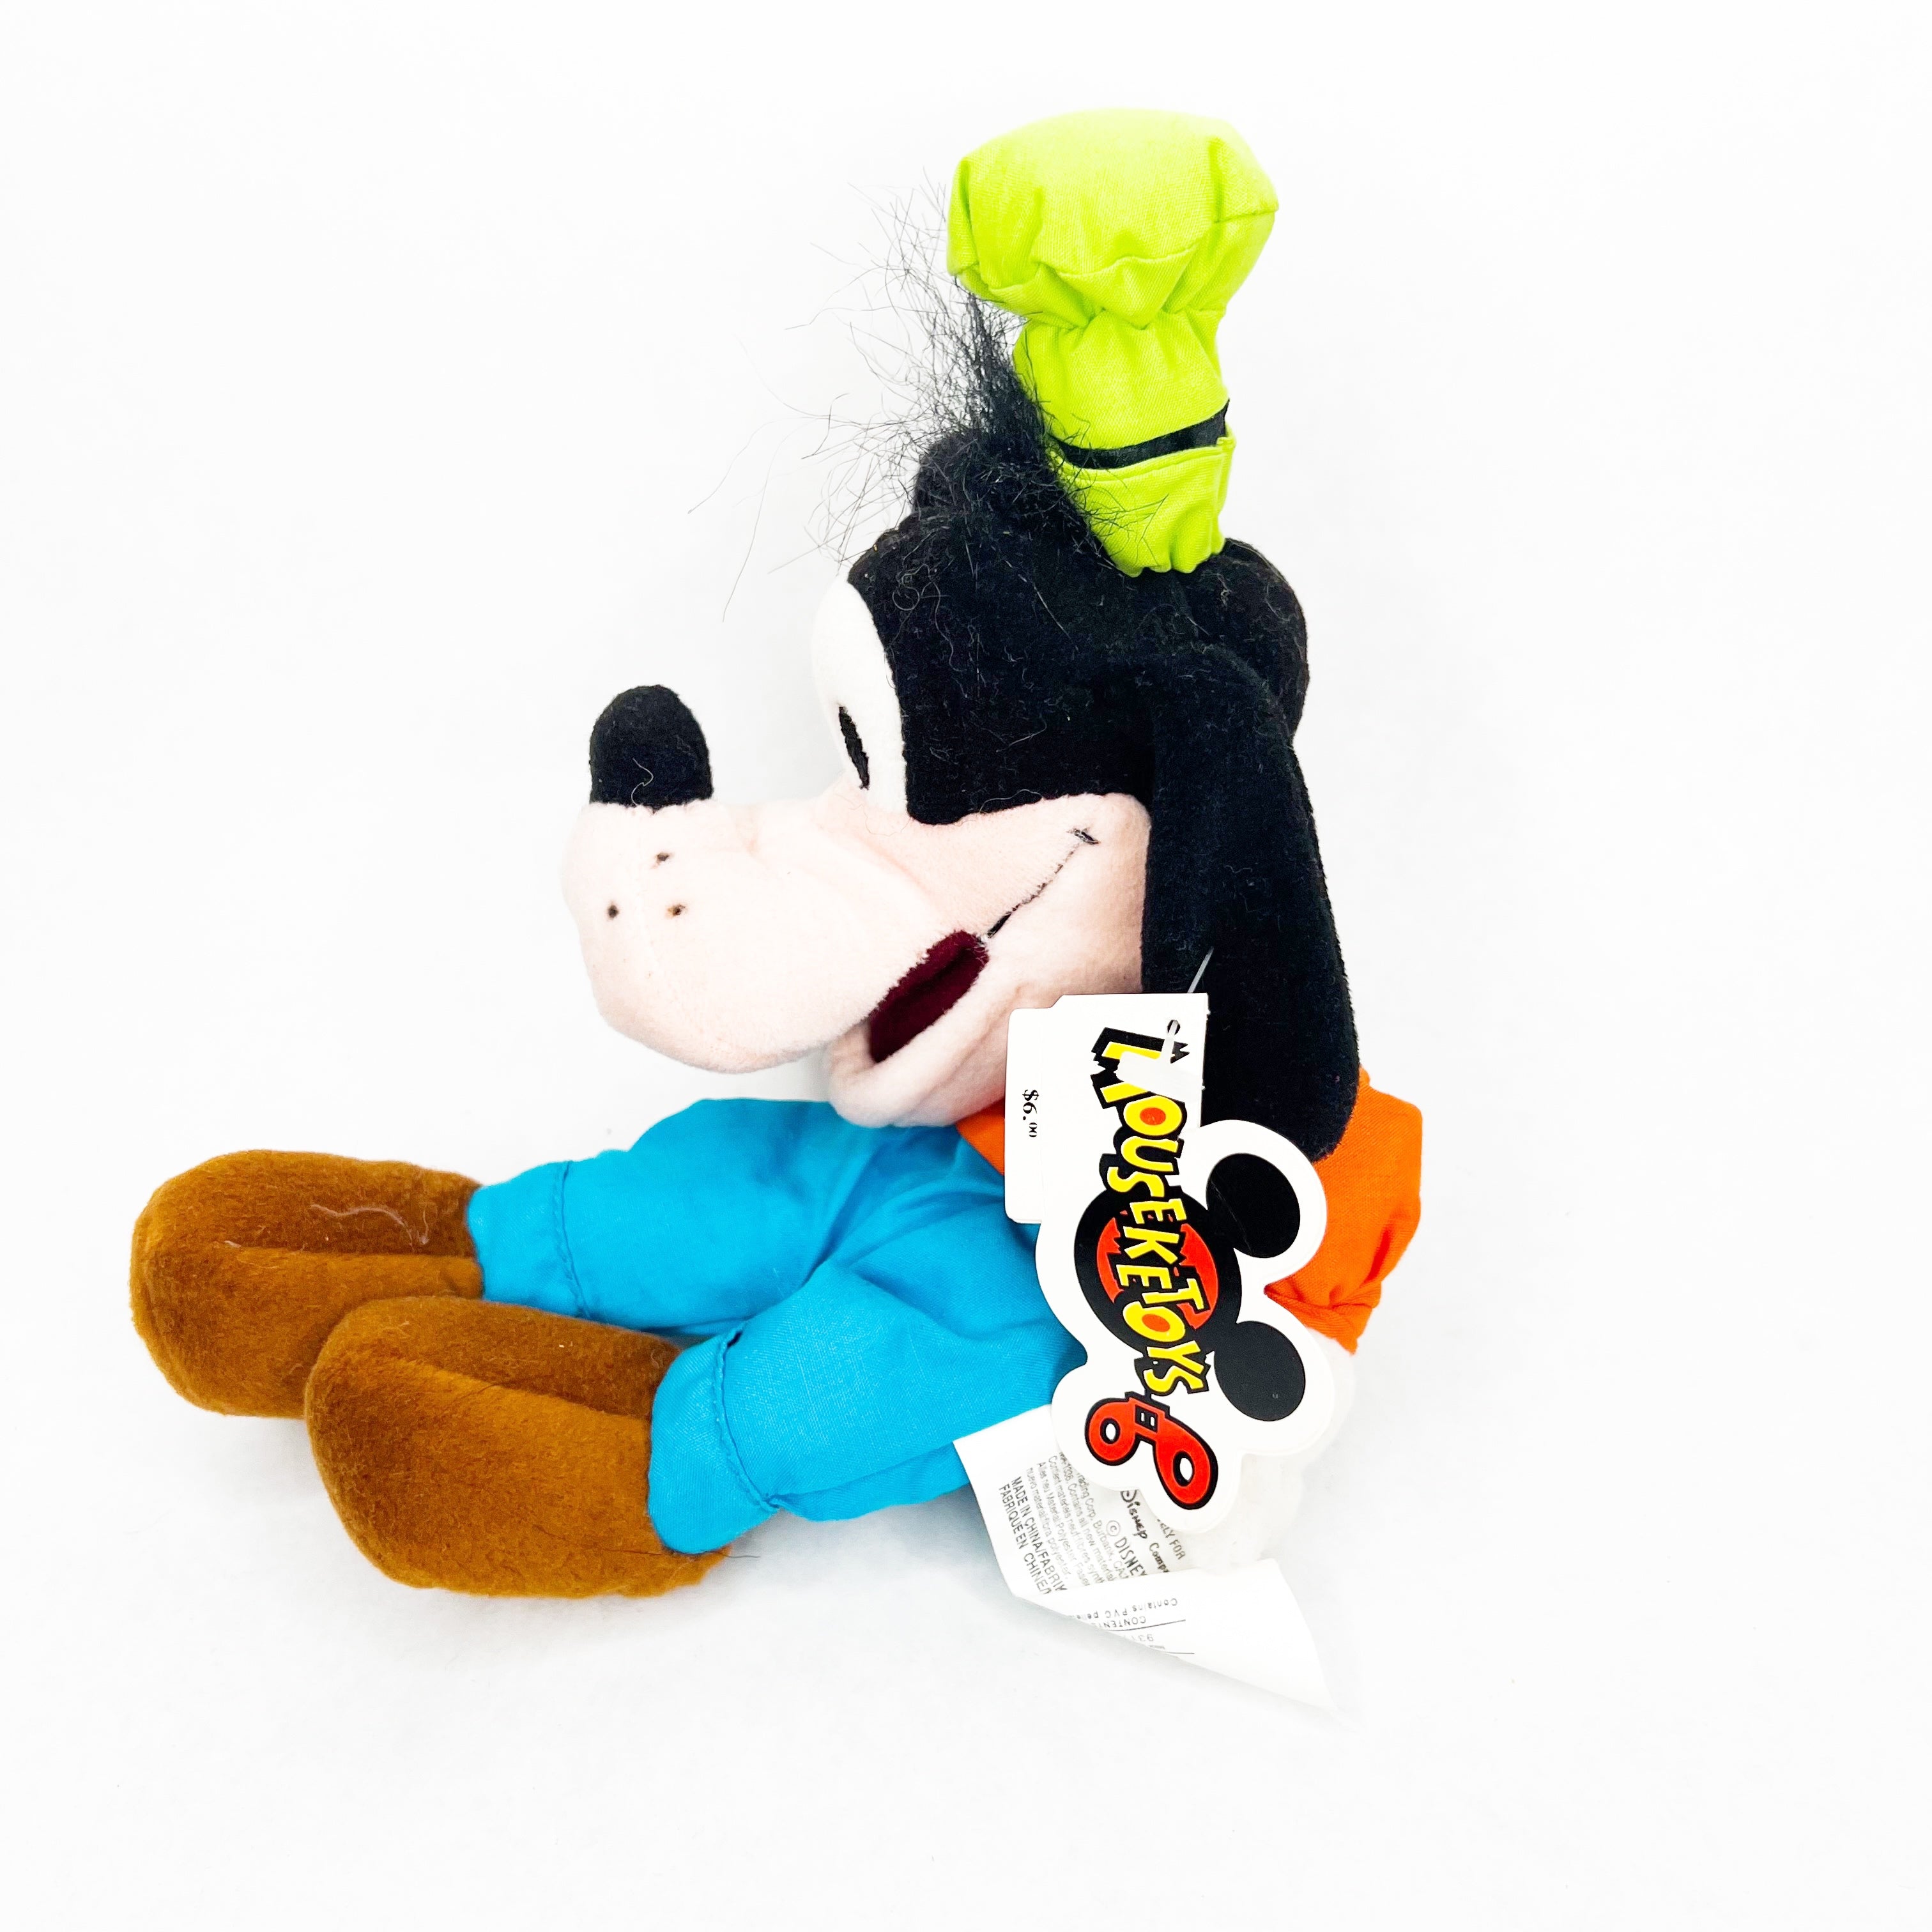  Disney Goofy Plush - Mini Bean Bag - 10 Inches, Mickey